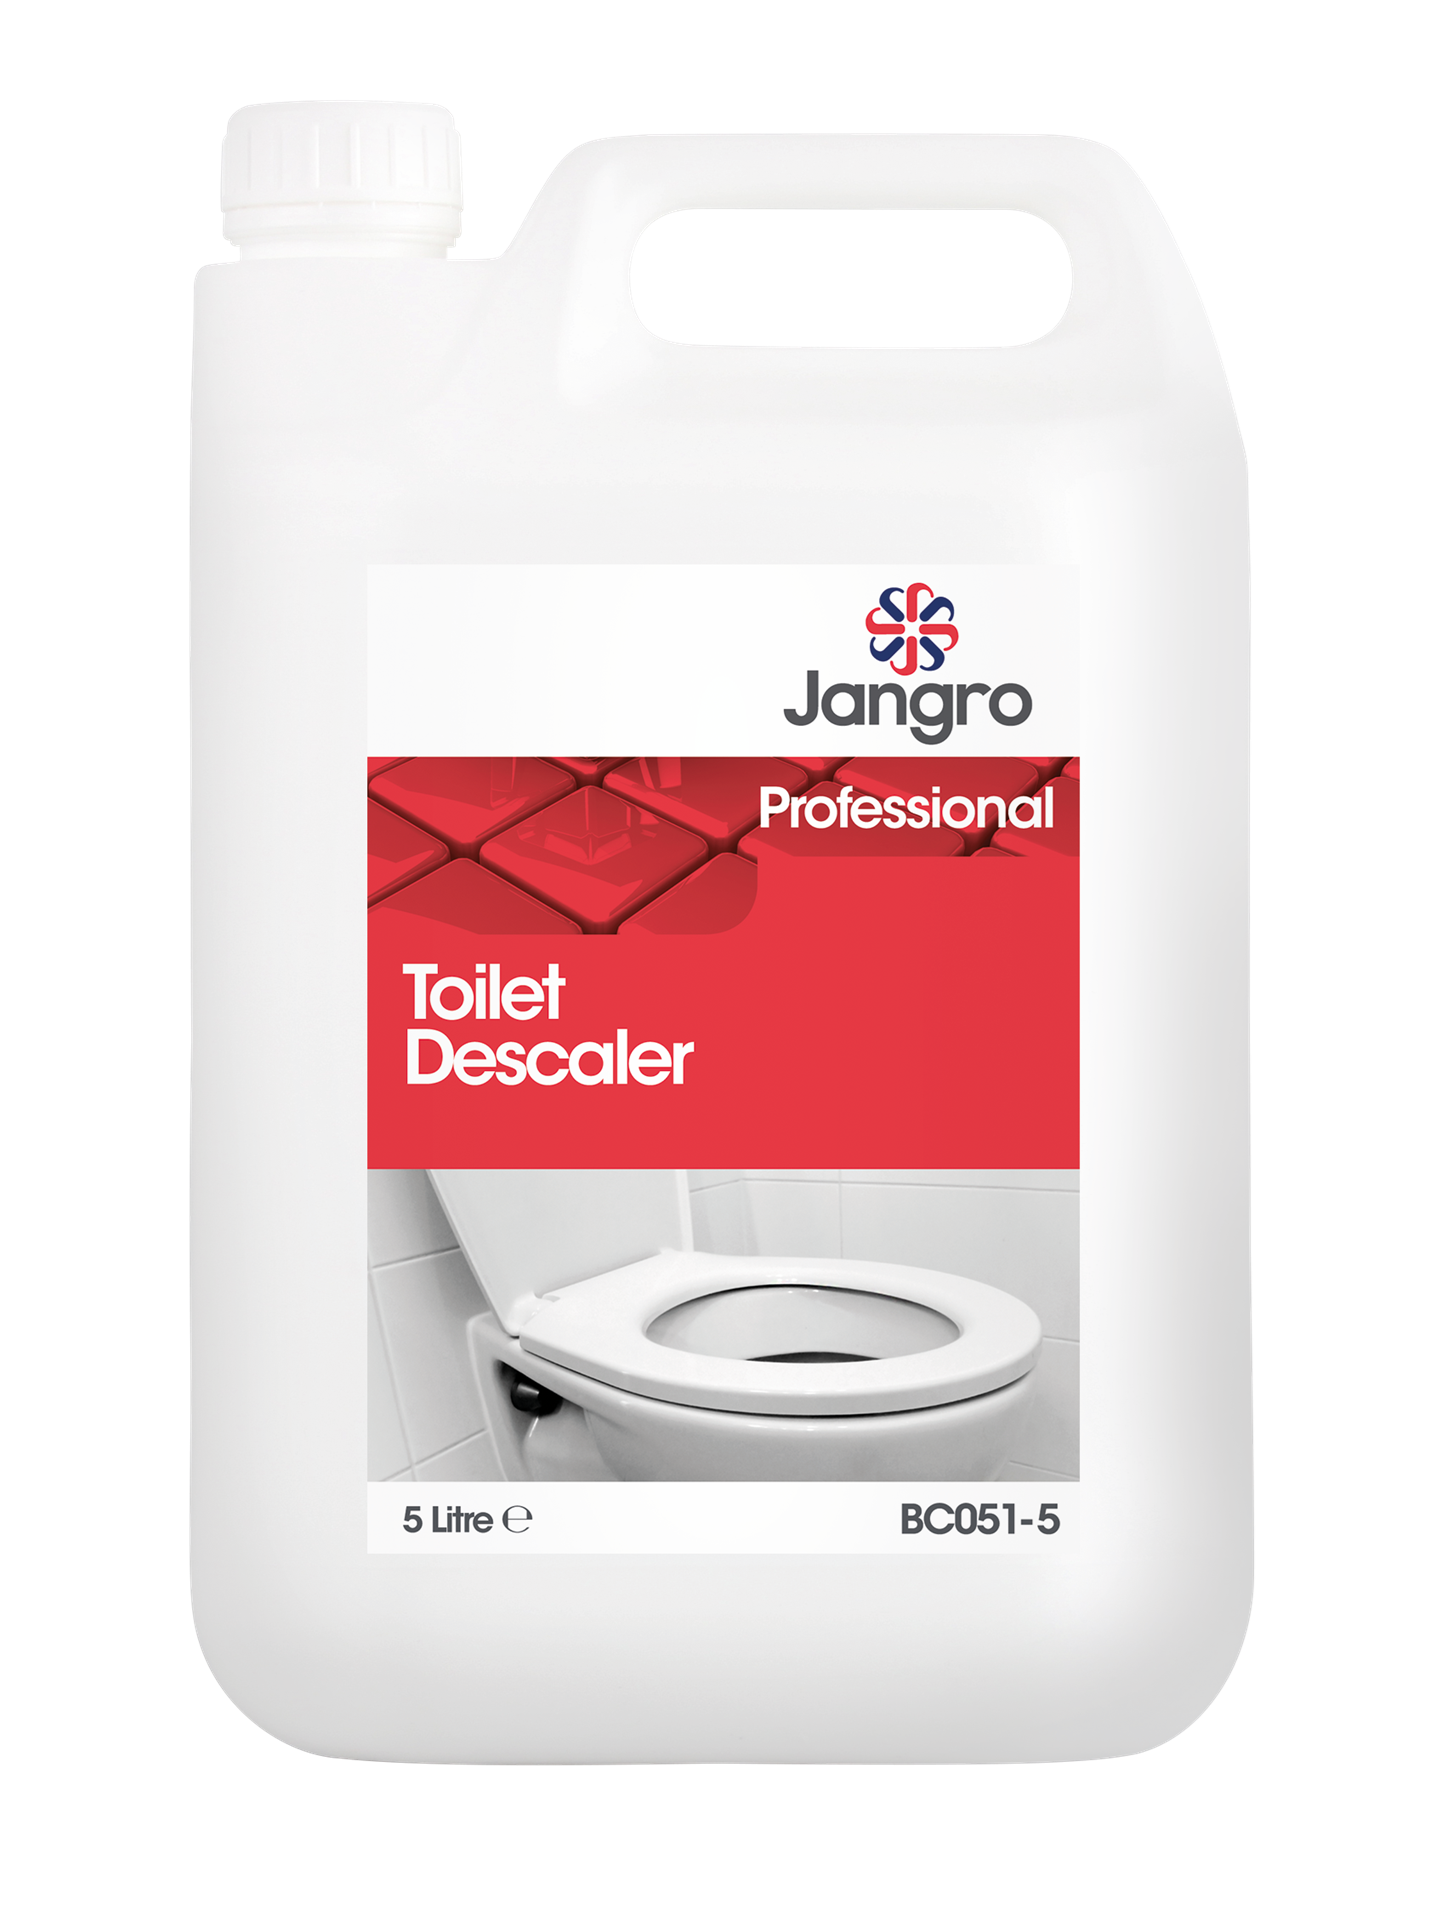 Jangro Professional Toilet Descaler, 5 Litre - H018-5LX2-JANGRO